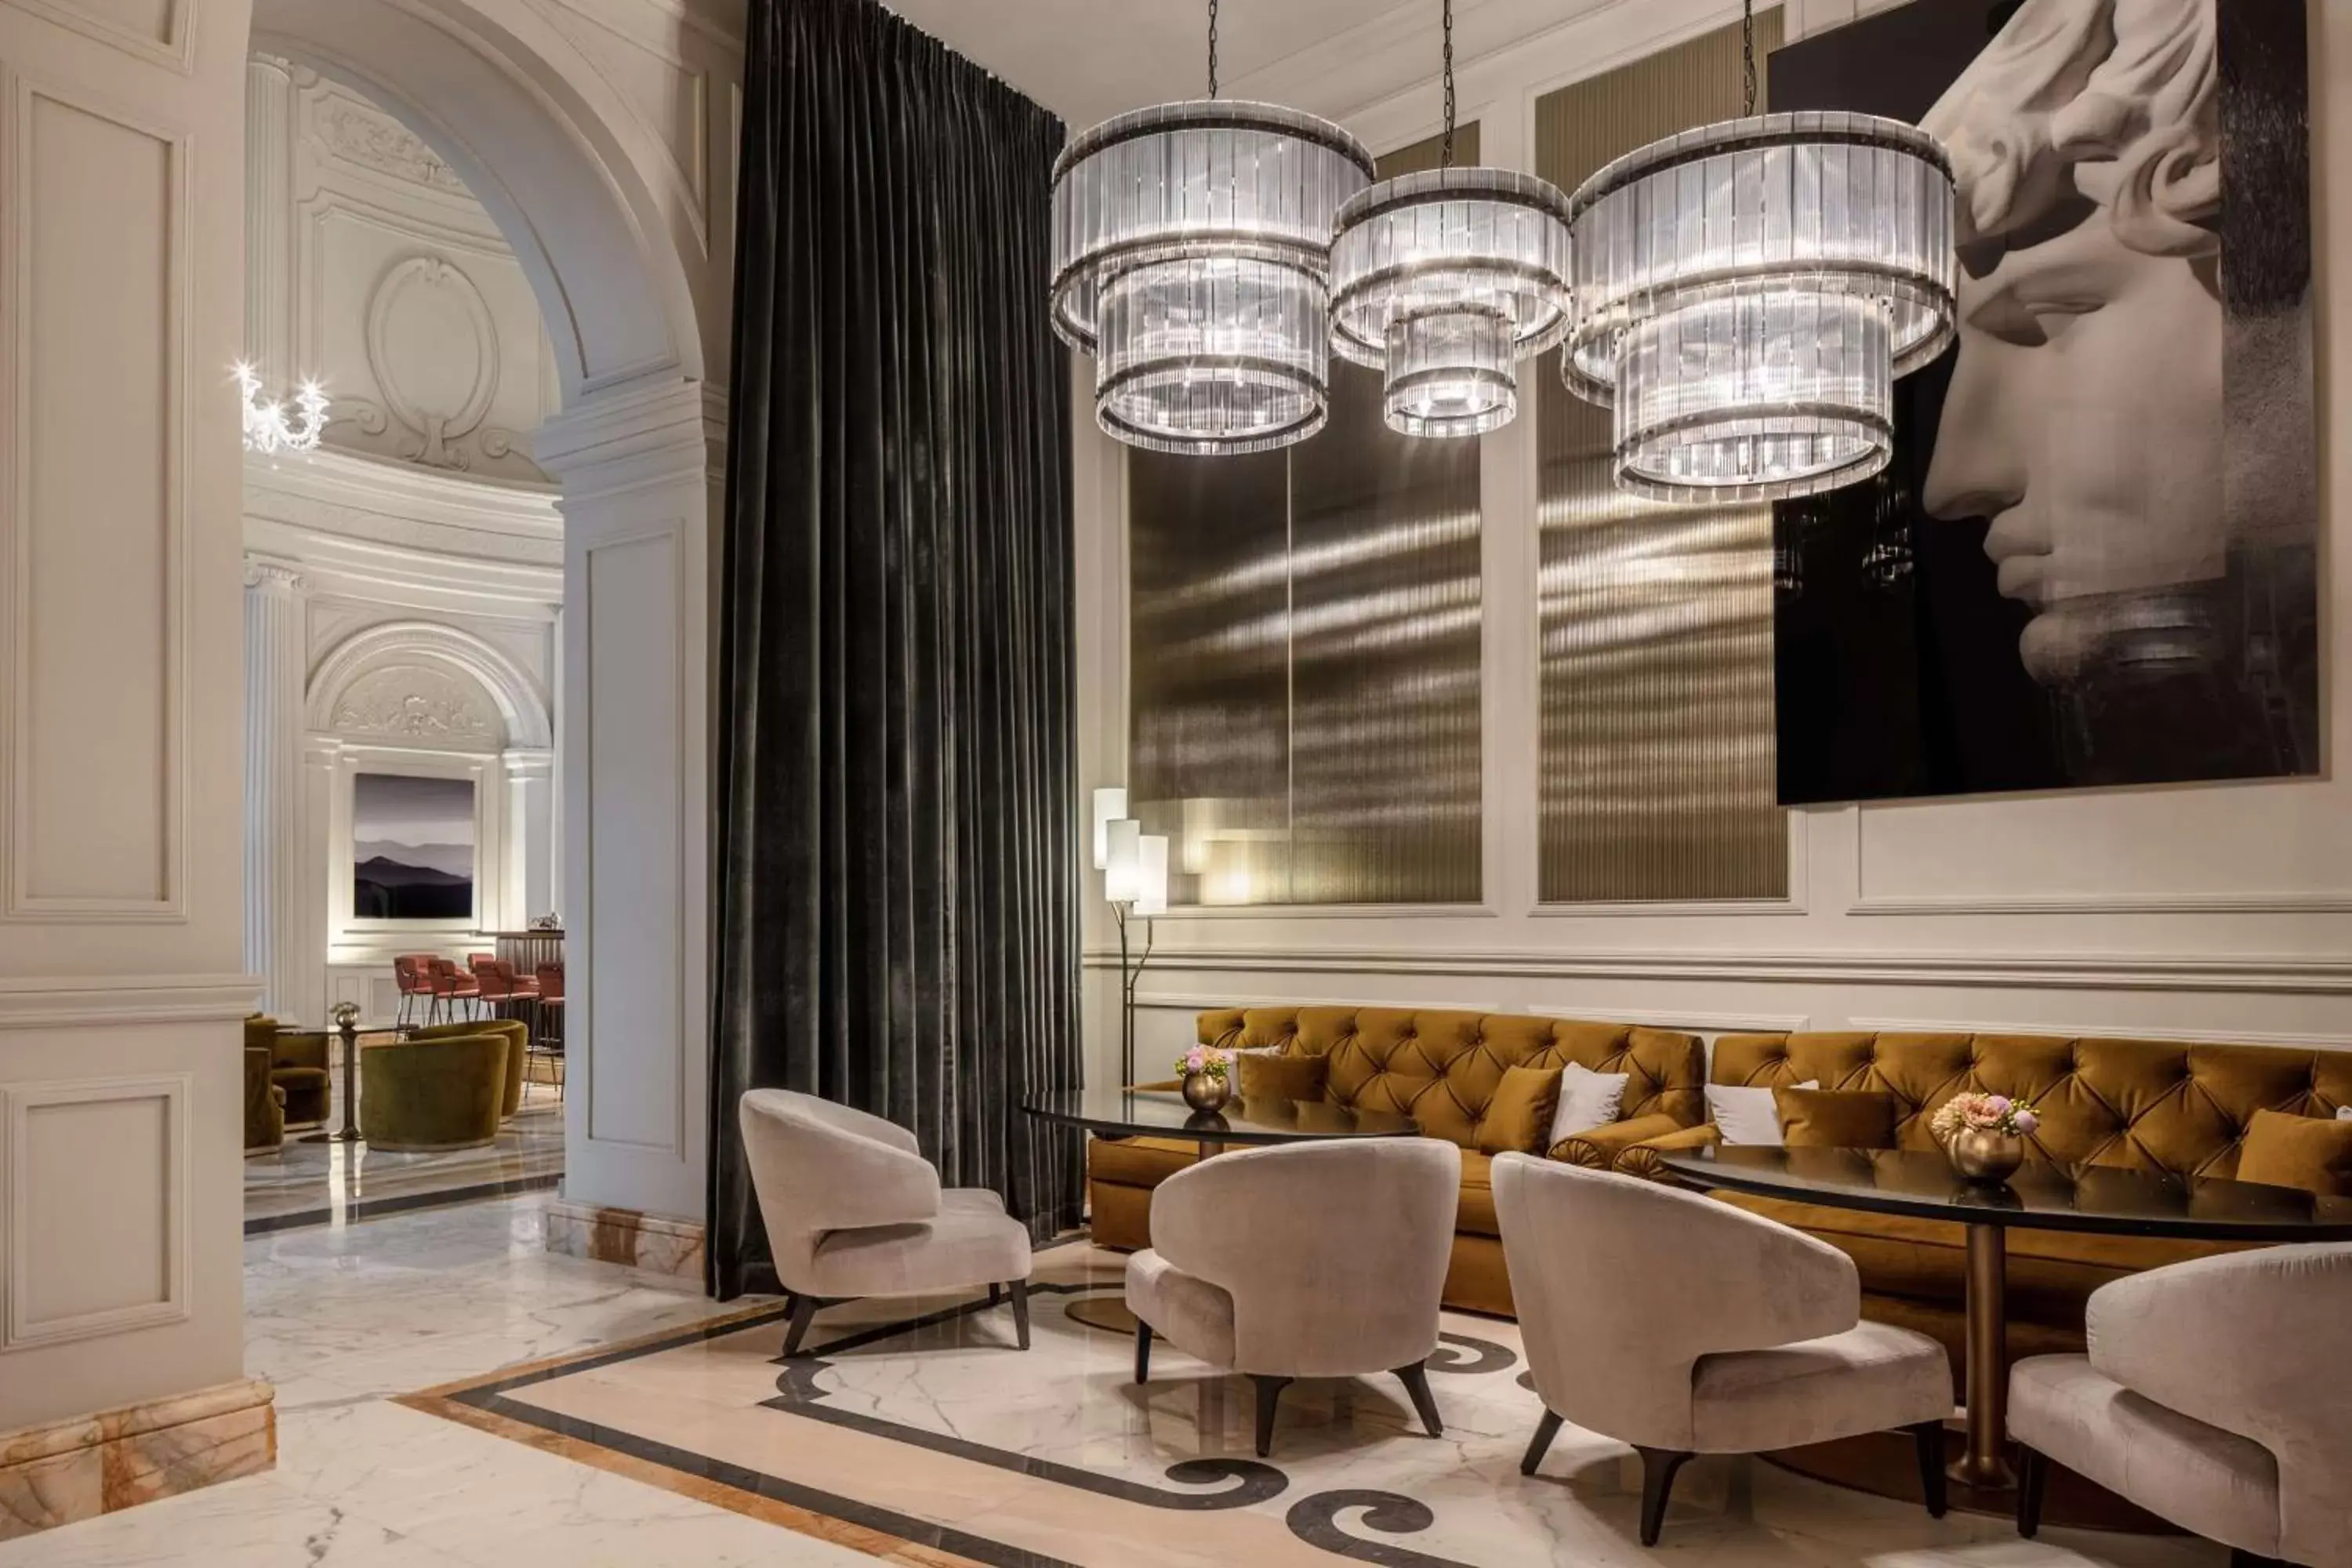 Lobby or reception in Anantara Palazzo Naiadi Rome Hotel - A Leading Hotel of the World